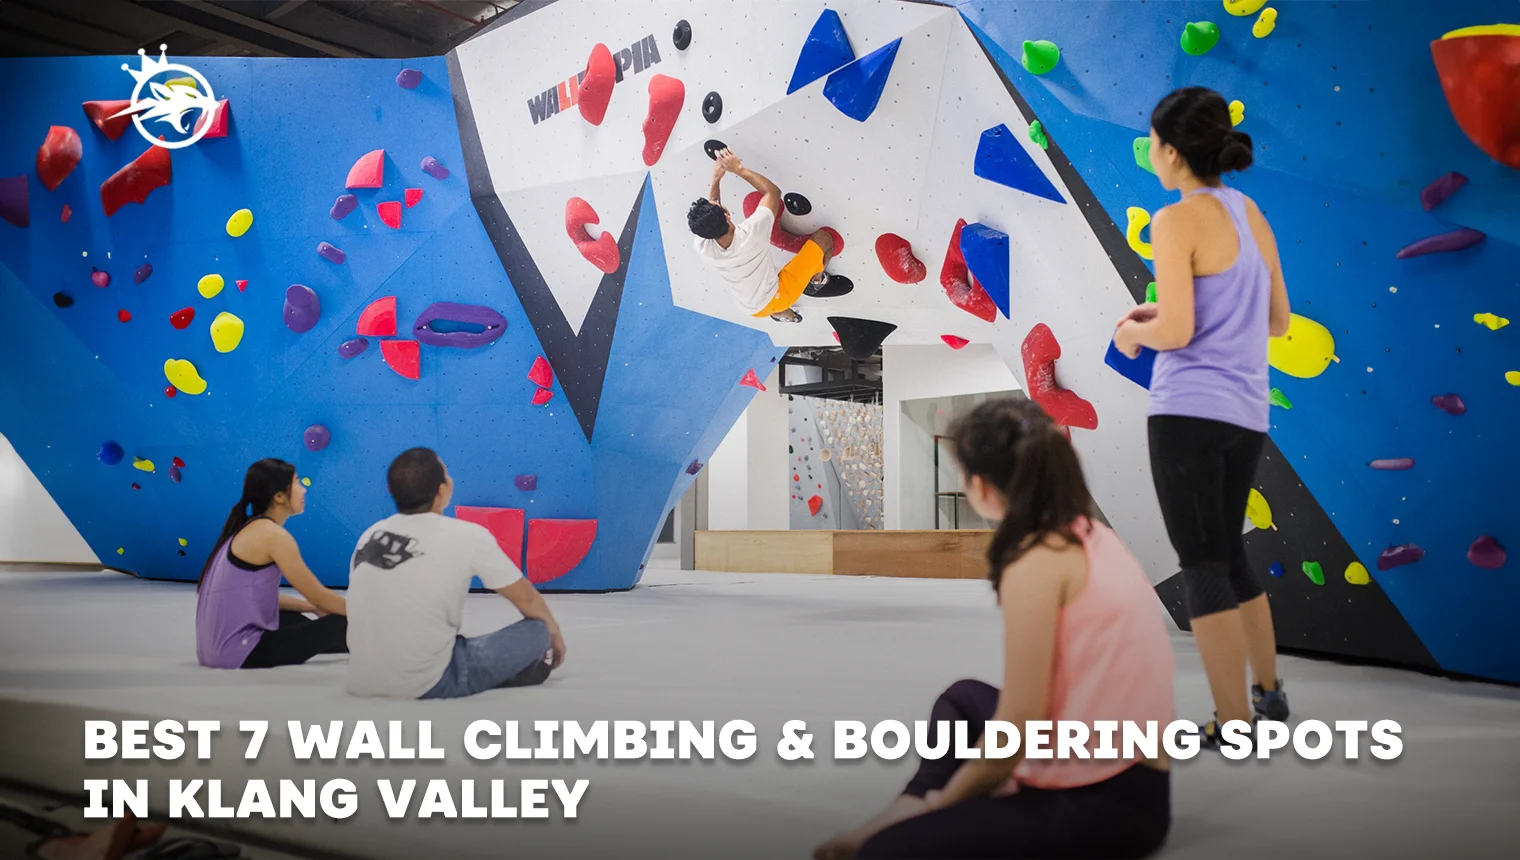 Best 8 Wall Climbing & Bouldering Spots in Klang Valley